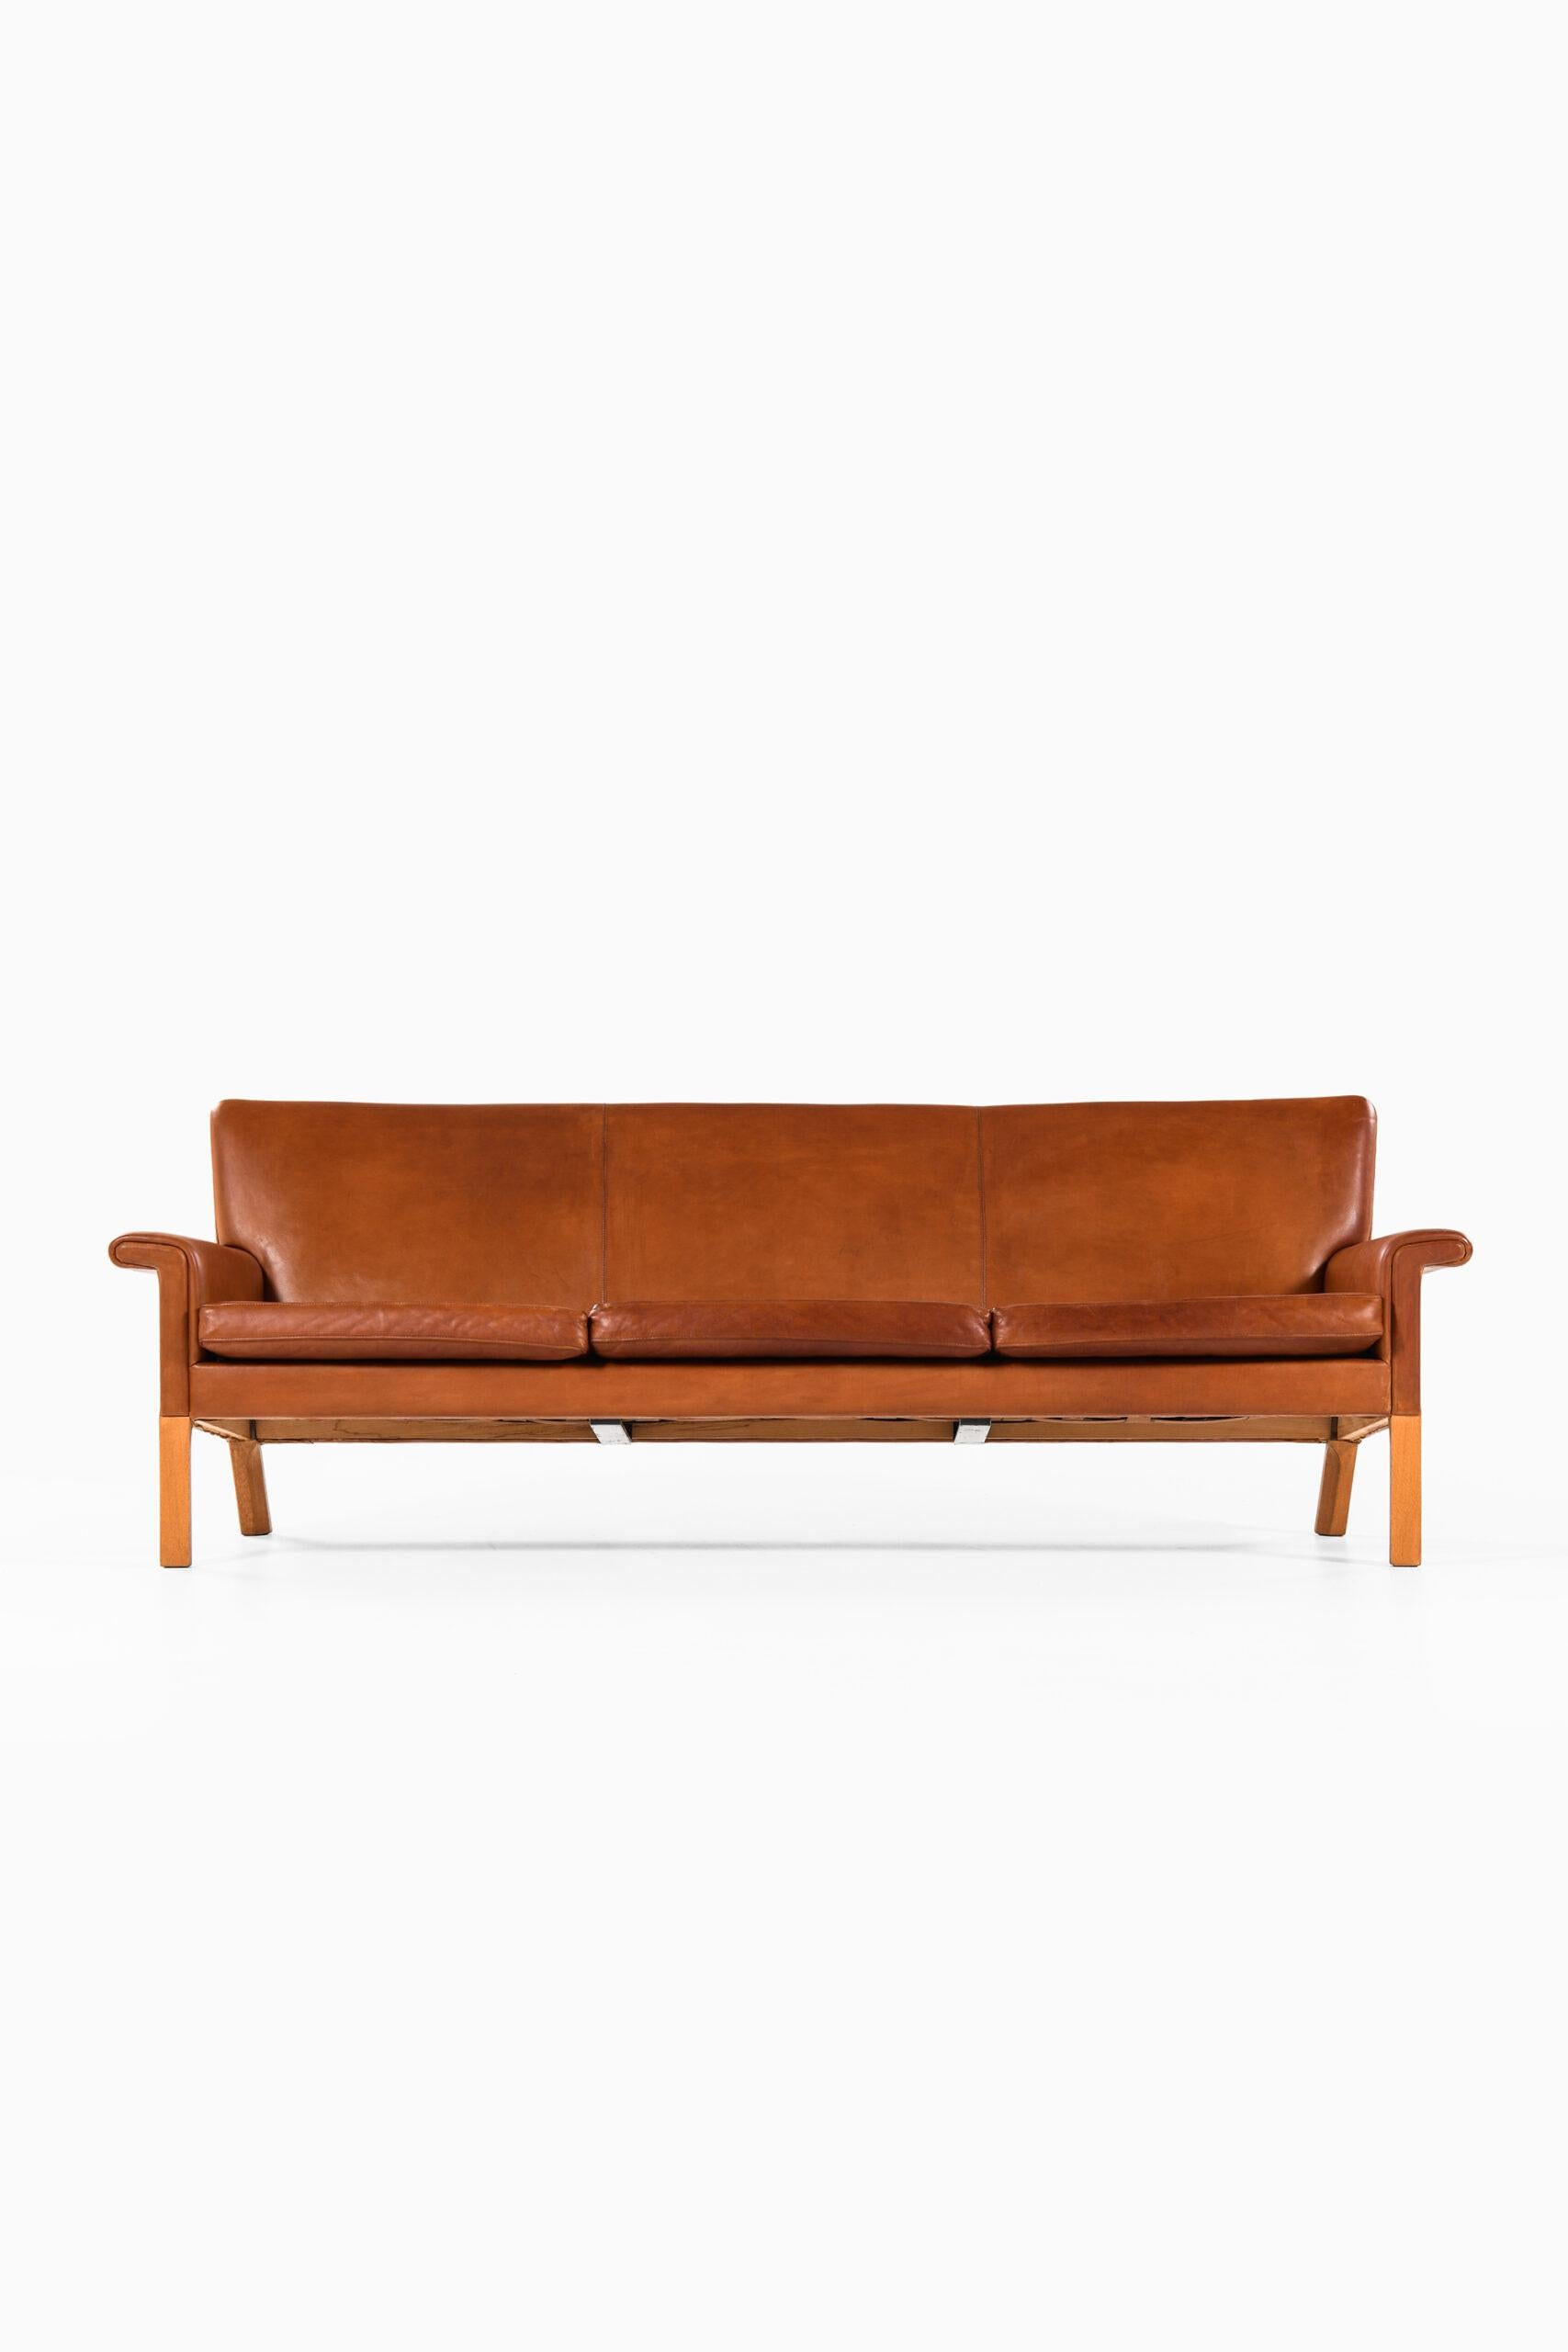 Very rare sofa model AP-64 designed by Hans Wegner. Produced by AP-Stolen in Denmark.